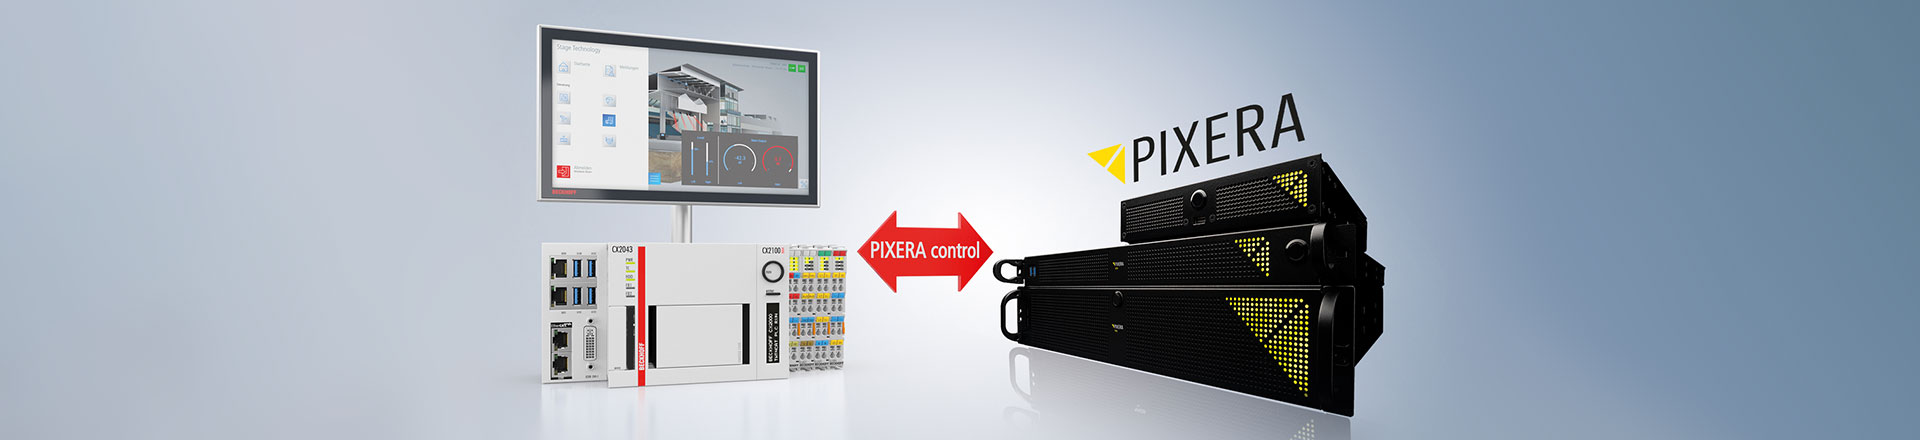 Nowy system sterowania multimediami Audio Video. PIXERA Control